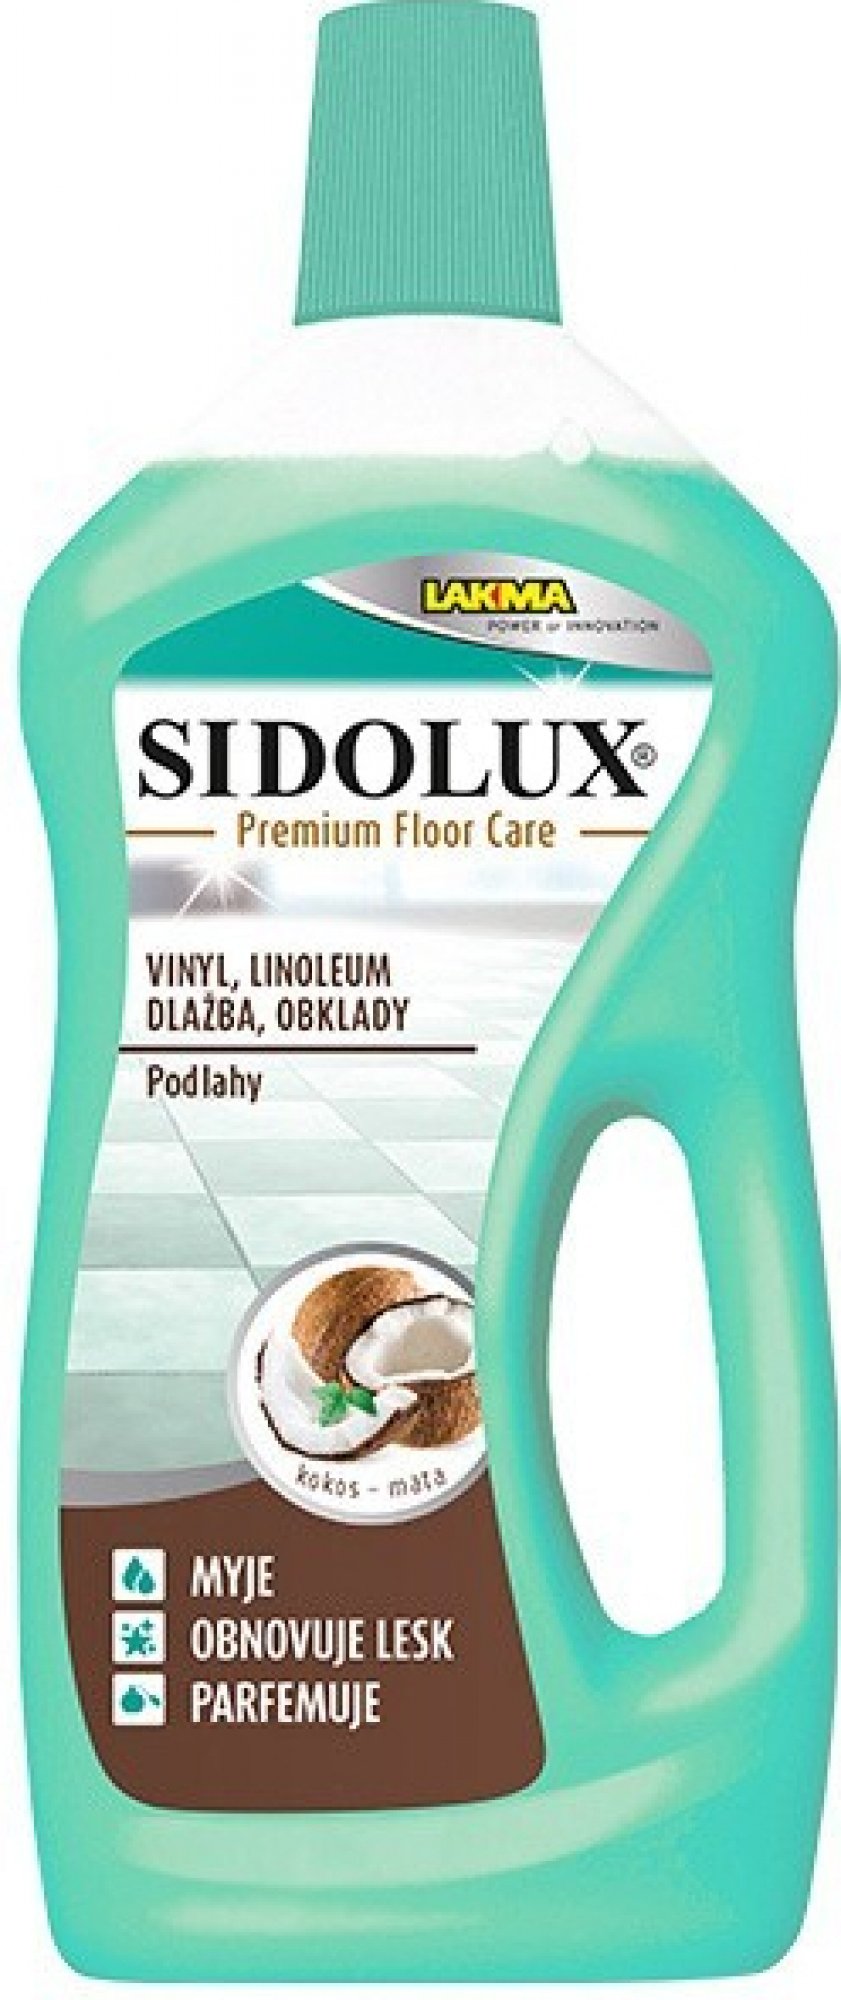 Sidolux Premium na Vinyl, linoleum, dlažbu, obklady - kokos a máta 750ml